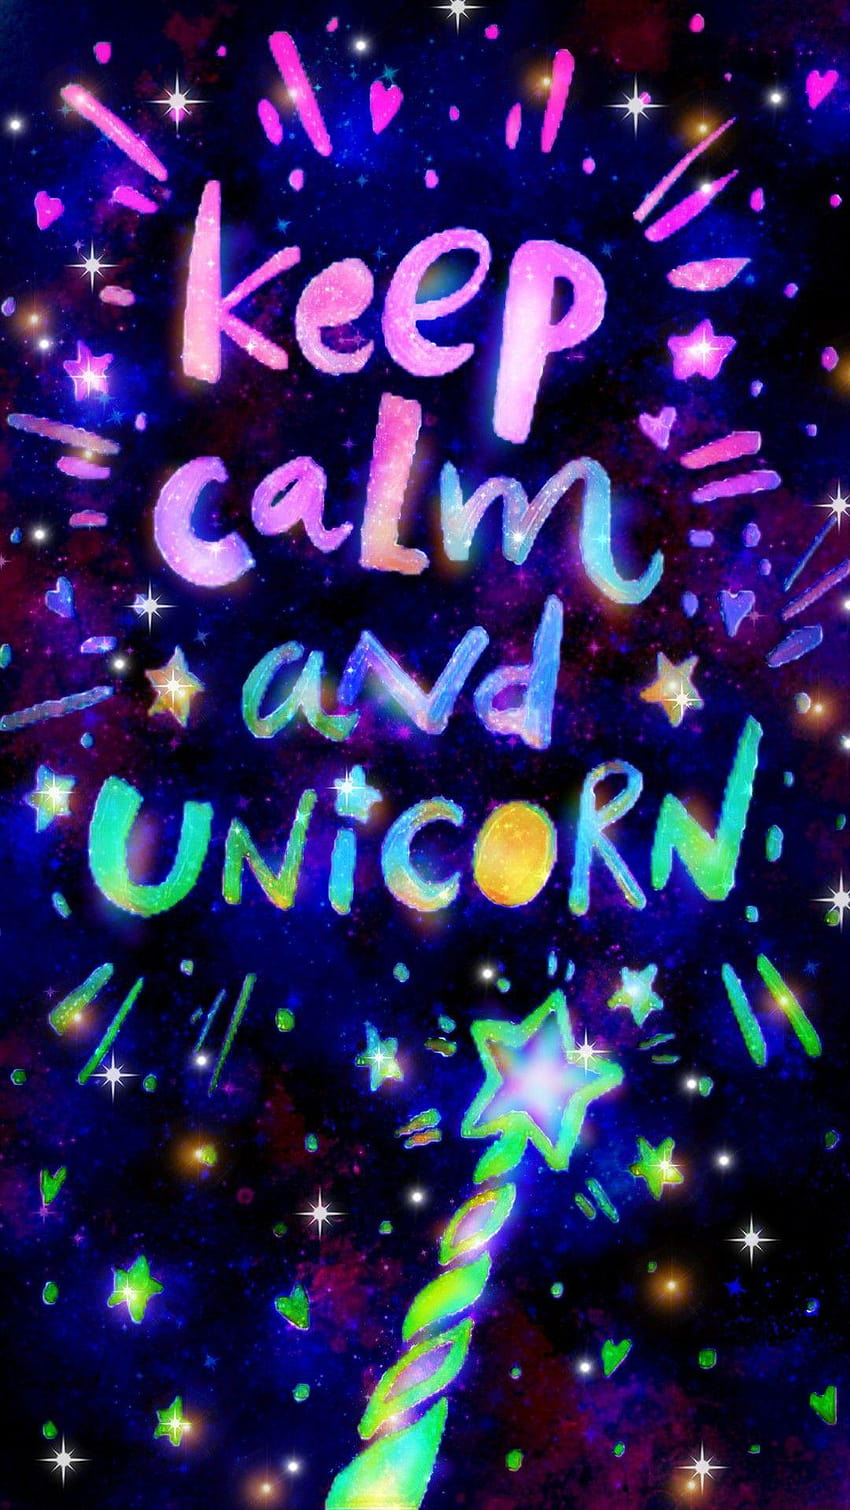 Keep Calm Unicorn Galaxy, made by me 落ち着いてユニコーンになろう HD電話の壁紙